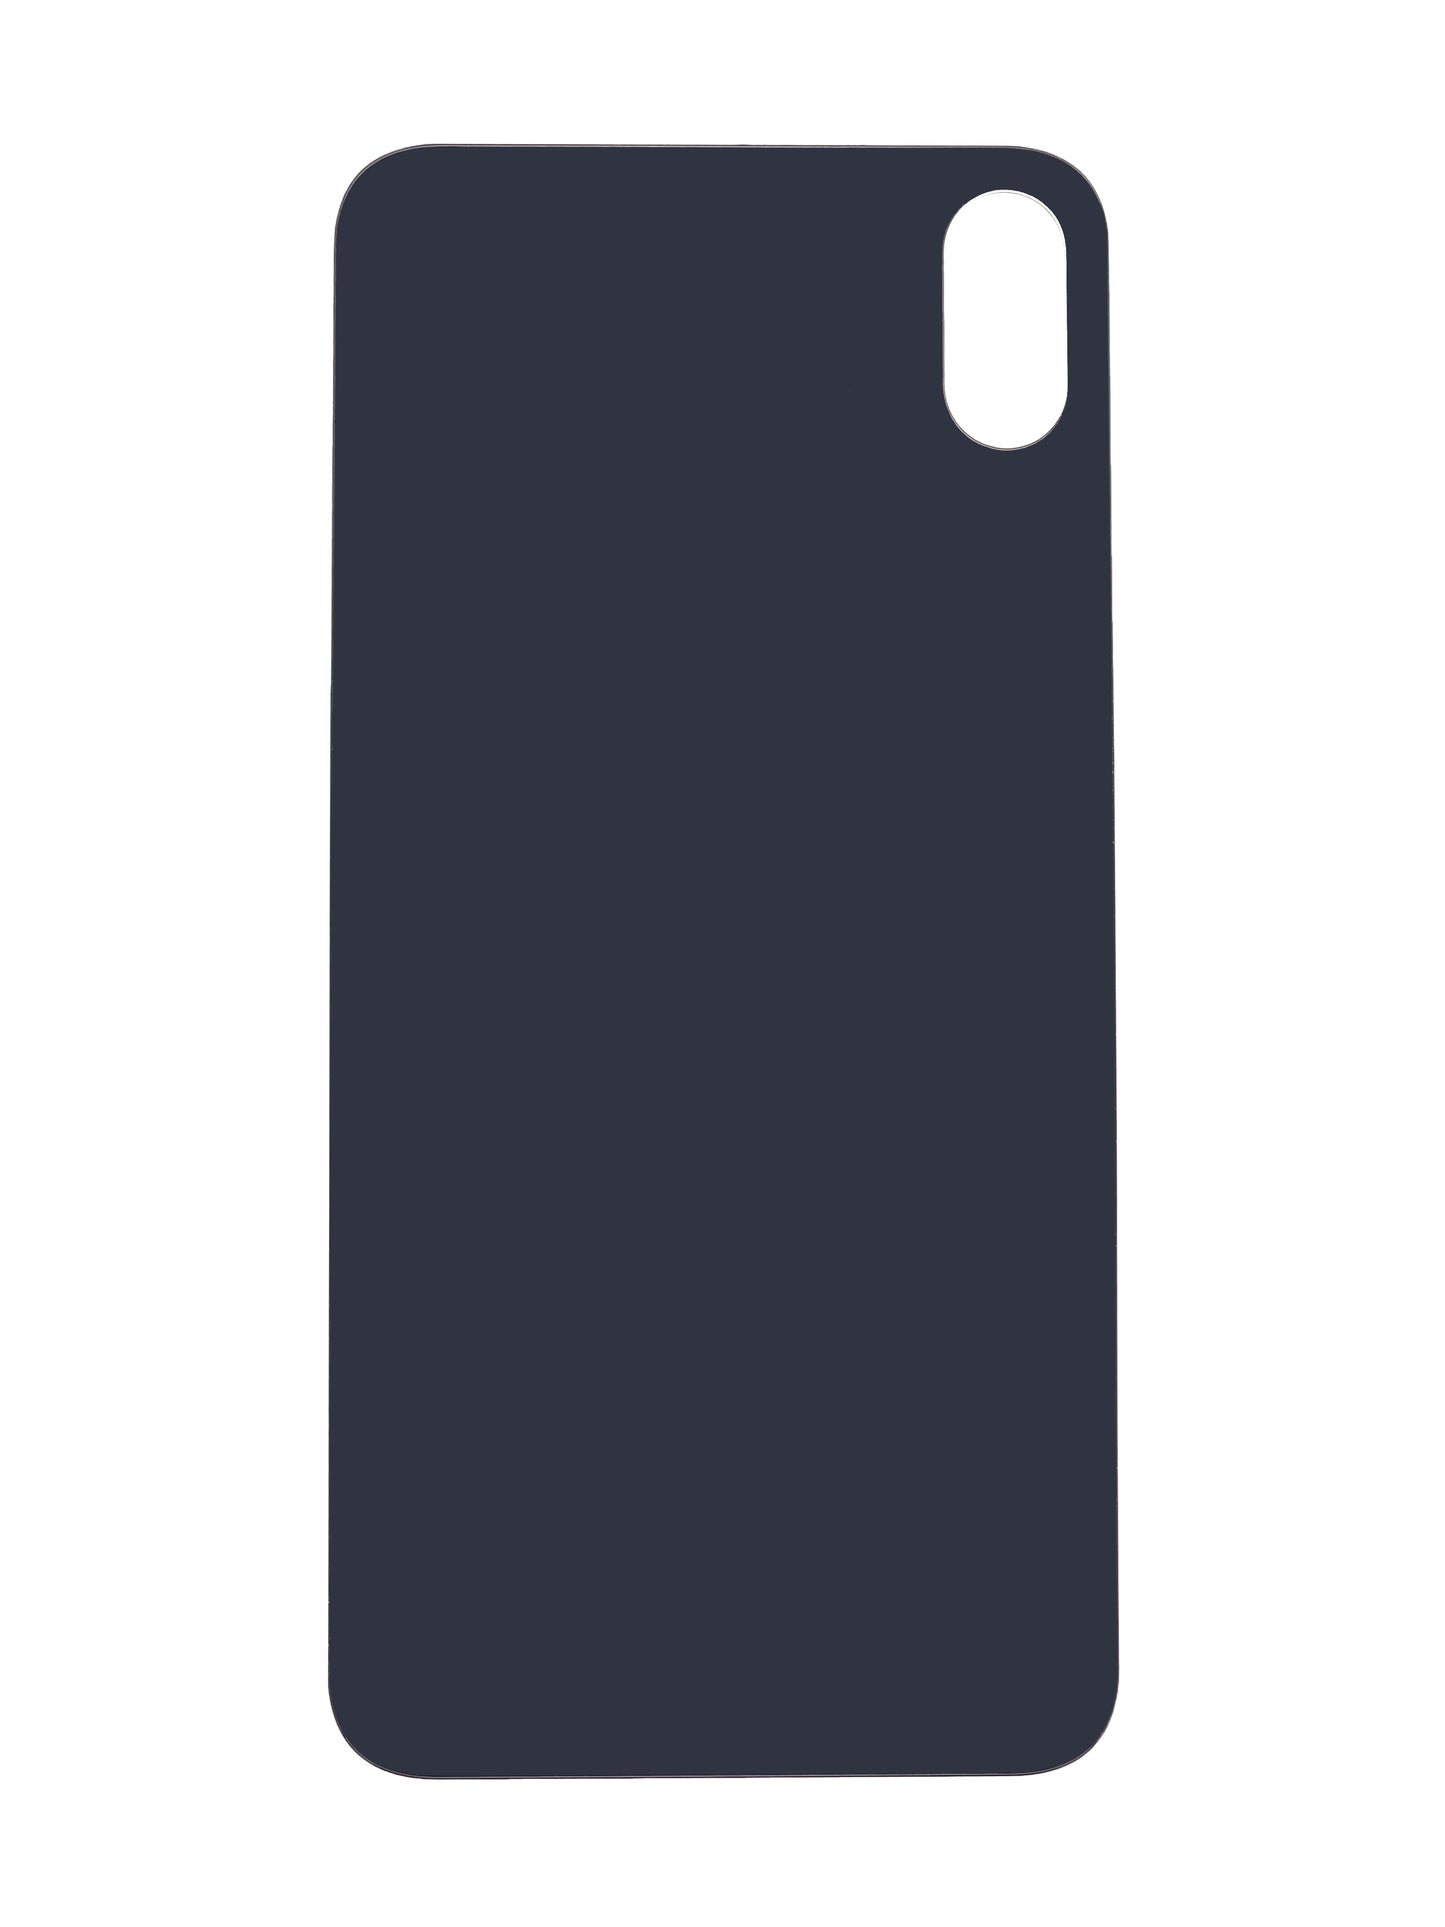 iPhone XS Max Back Glass (No Logo) (Black)